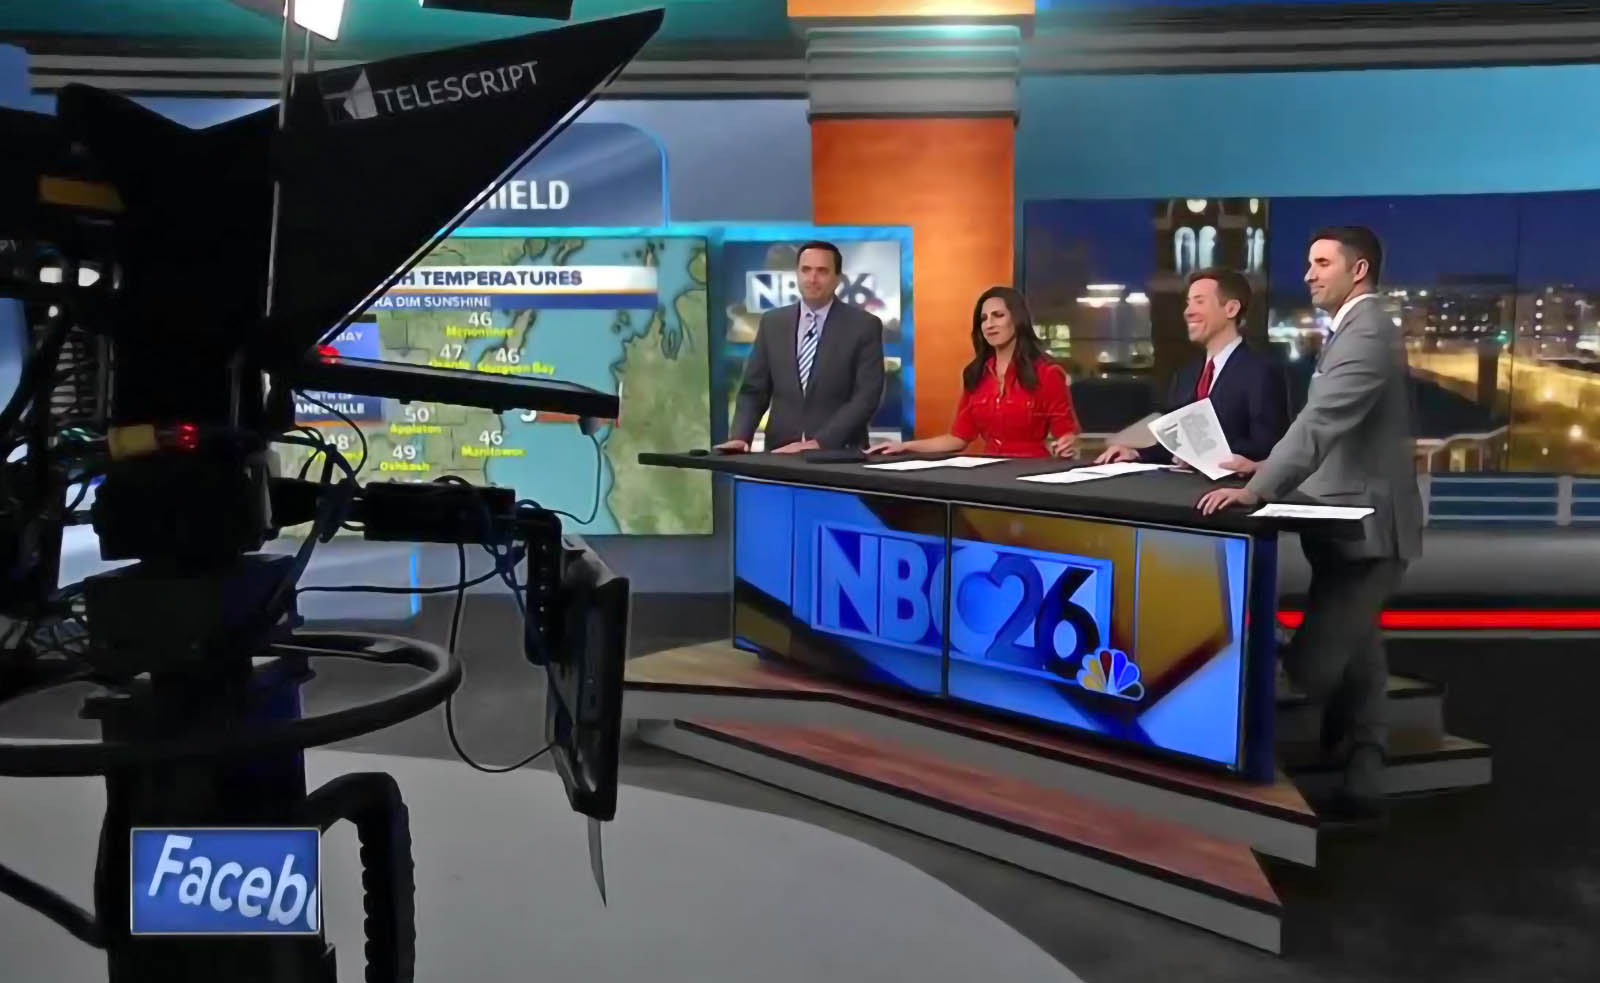 Live Coverage Studio for NBC 26 News